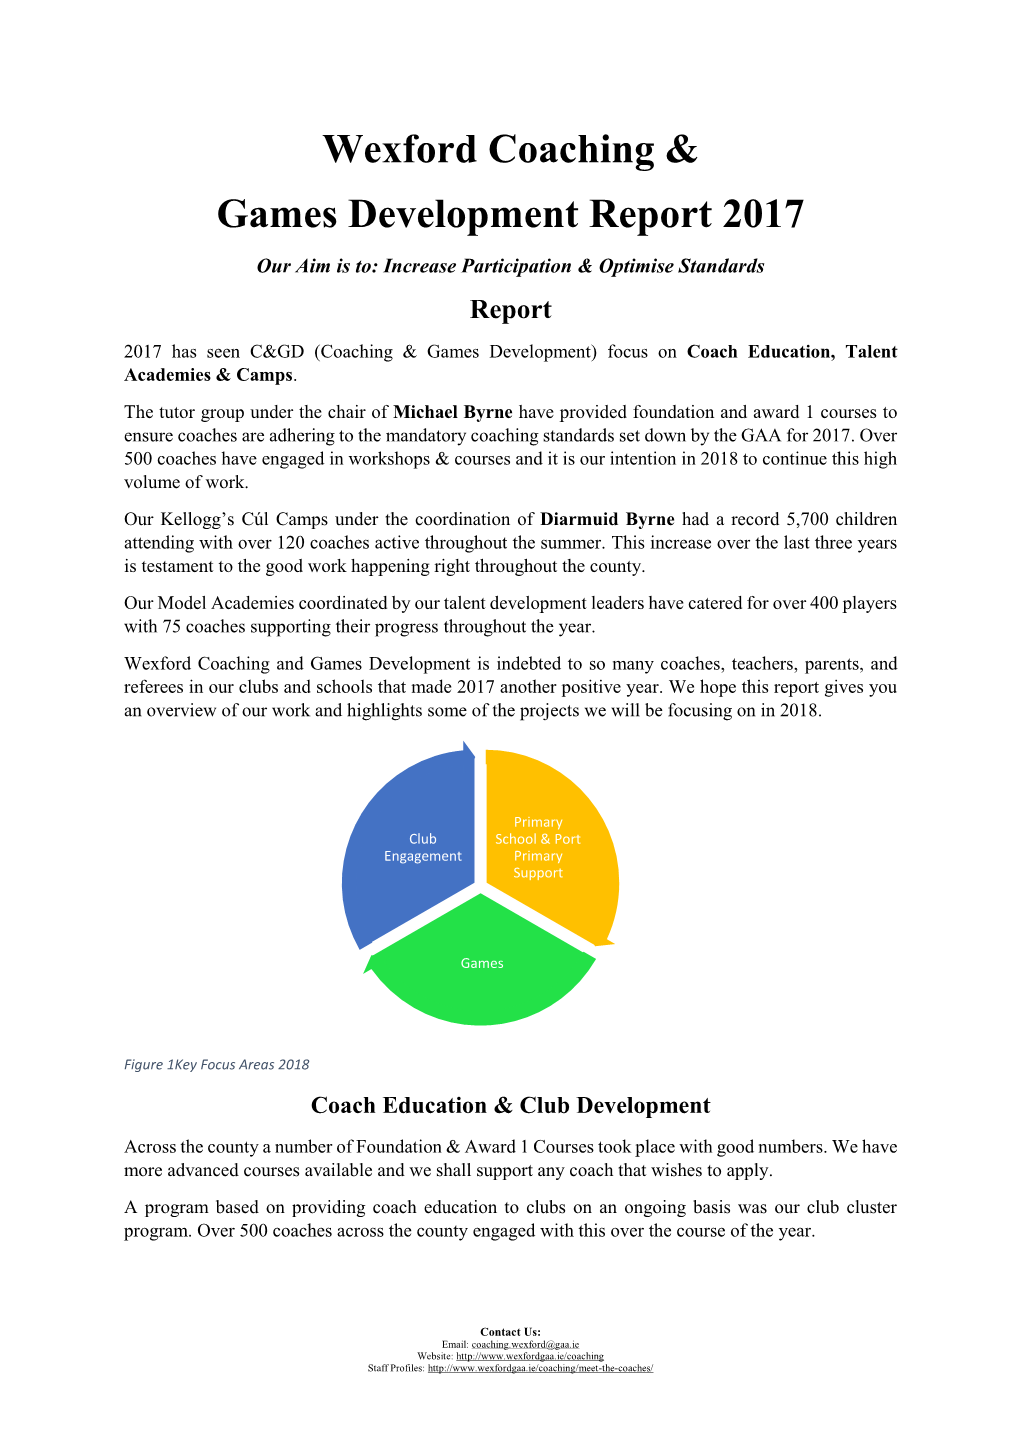 Wexford Coaching & Games Development Report 2017